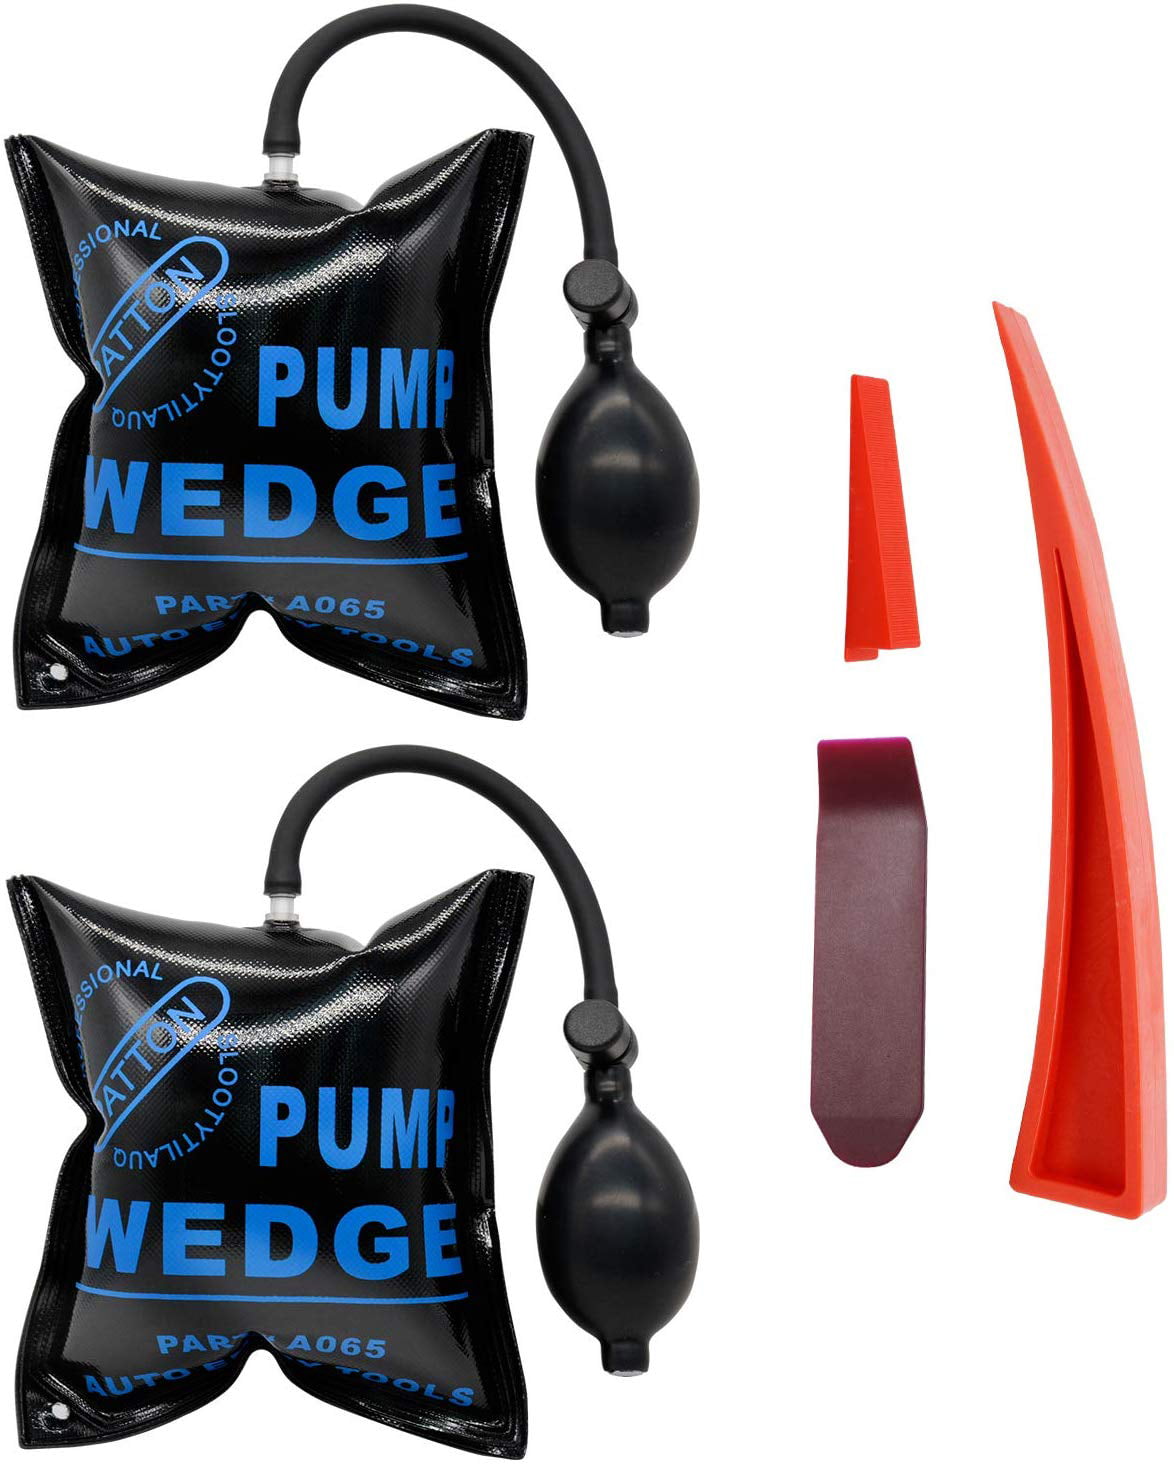 2x Inflatable Wedge Pump Air For Car Door Window Shim Tool Pump Wedge Air Pump 